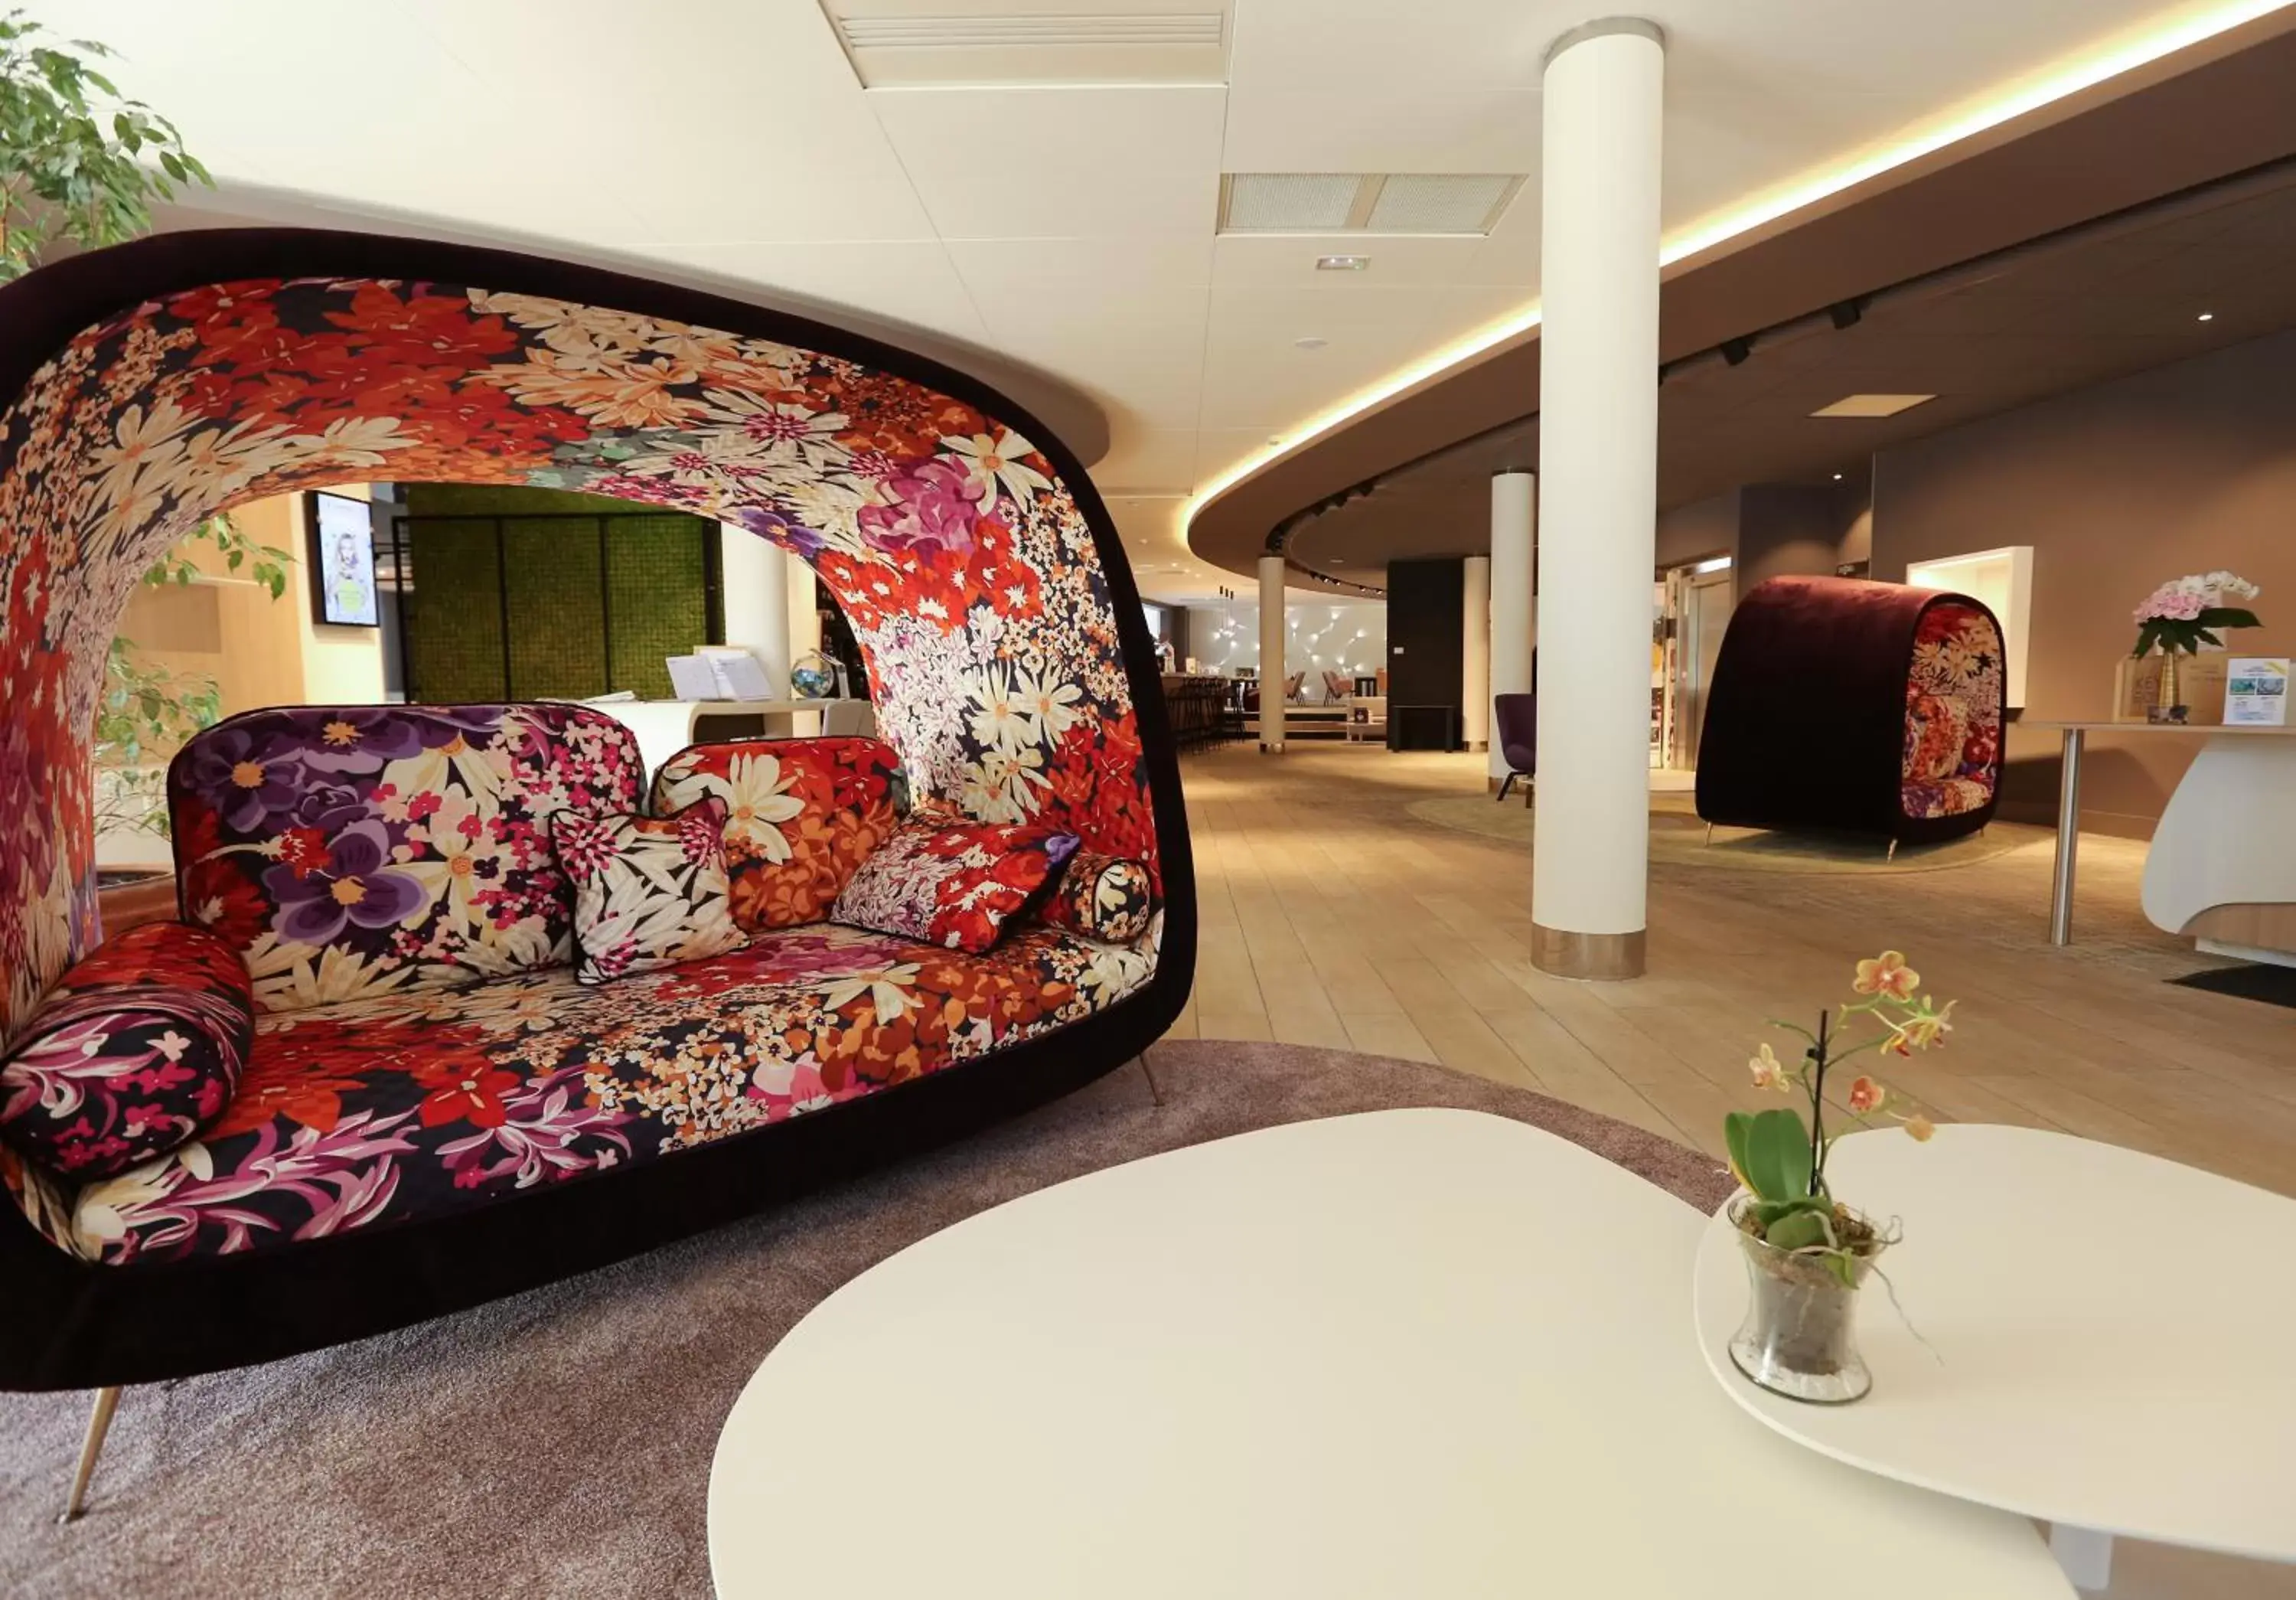 Lobby or reception, Lobby/Reception in Novotel Resort & Spa Biarritz Anglet